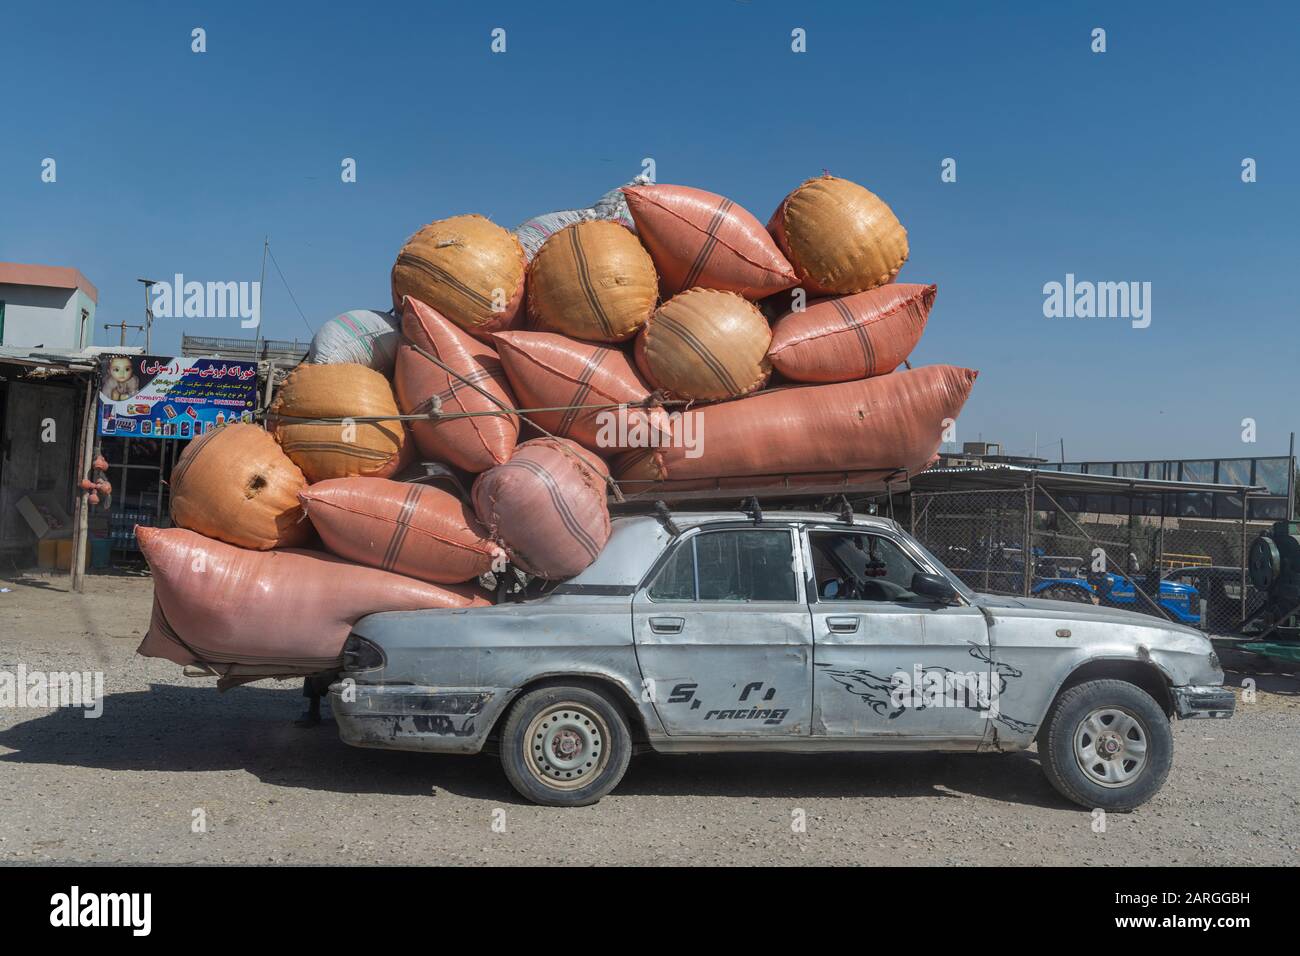 Loaded Russian car, Mazar-E-Sharif, Afghanistan, Asia Stock Photo